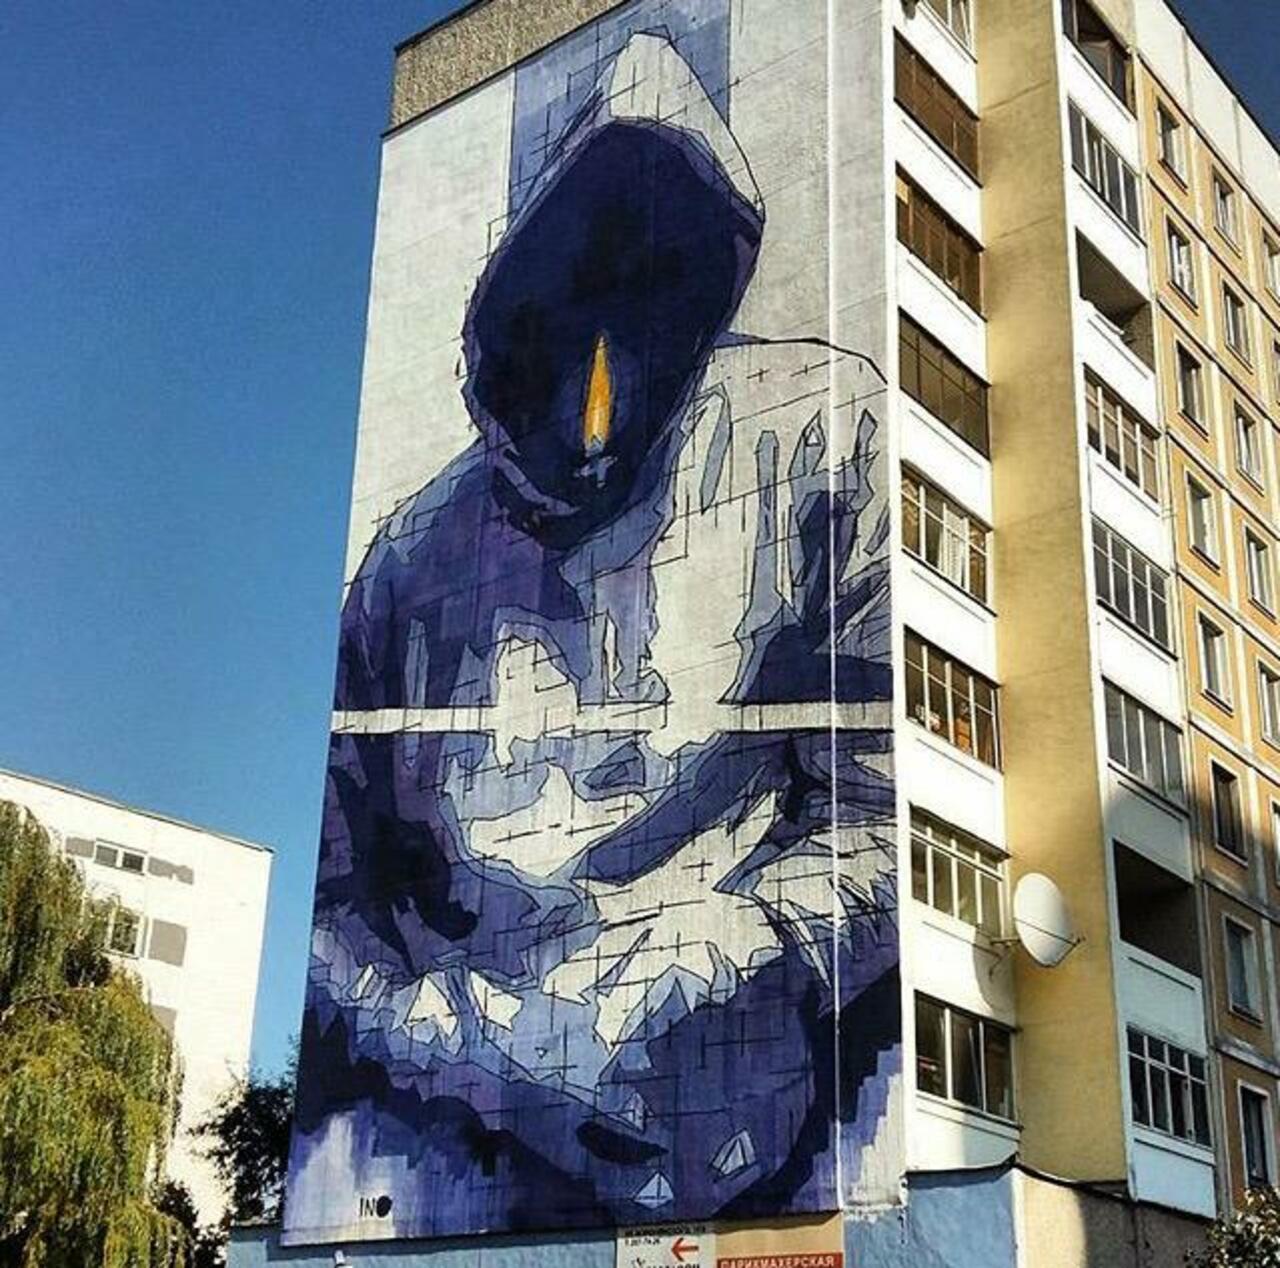 'Man With No Name' 
New Street Art by iNO in Minsk, Belarus 

#art #graffiti #mural #streetart http://t.co/95Oww4940M